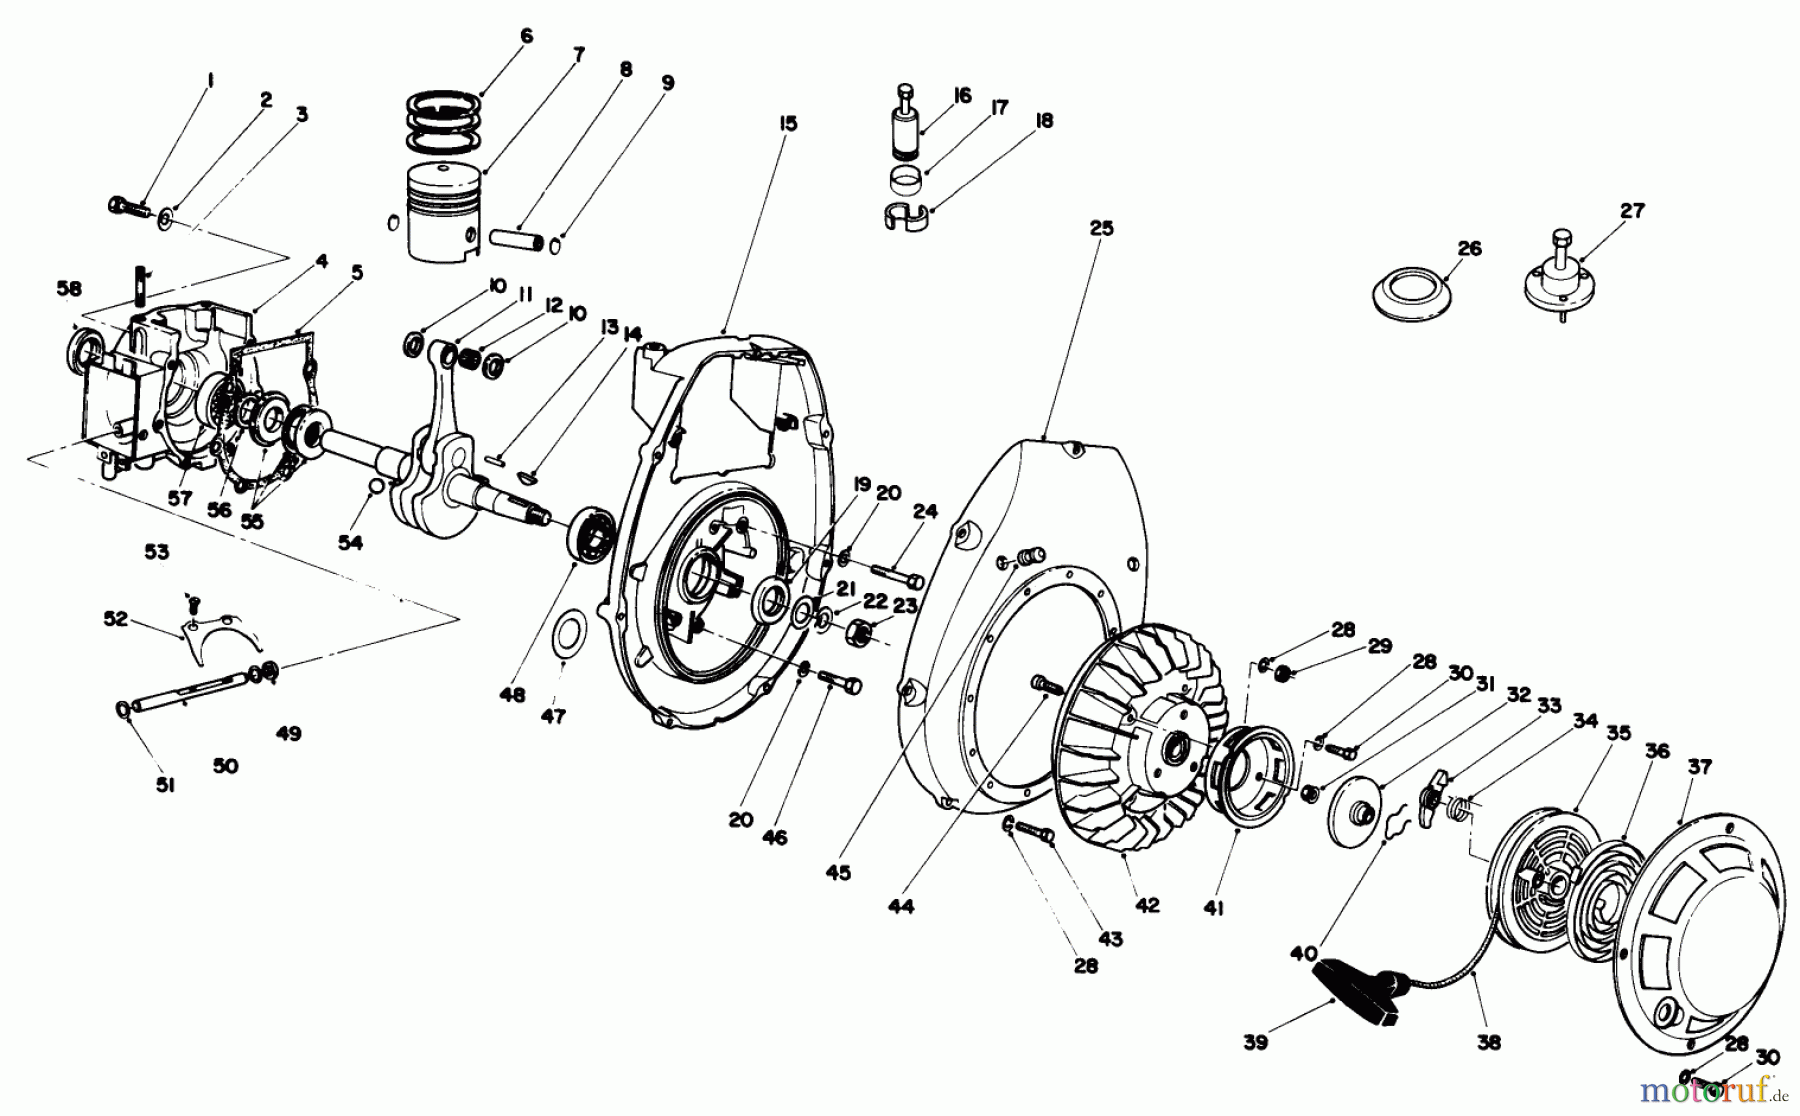  Toro Neu Mowers, Drive Unit Only 30113 - Toro Mid-Size Proline Gear Traction Unit, 8 hp, 1988 (8000001-8999999) CRANKCASE & FLYWHEEL ASSEMBLY